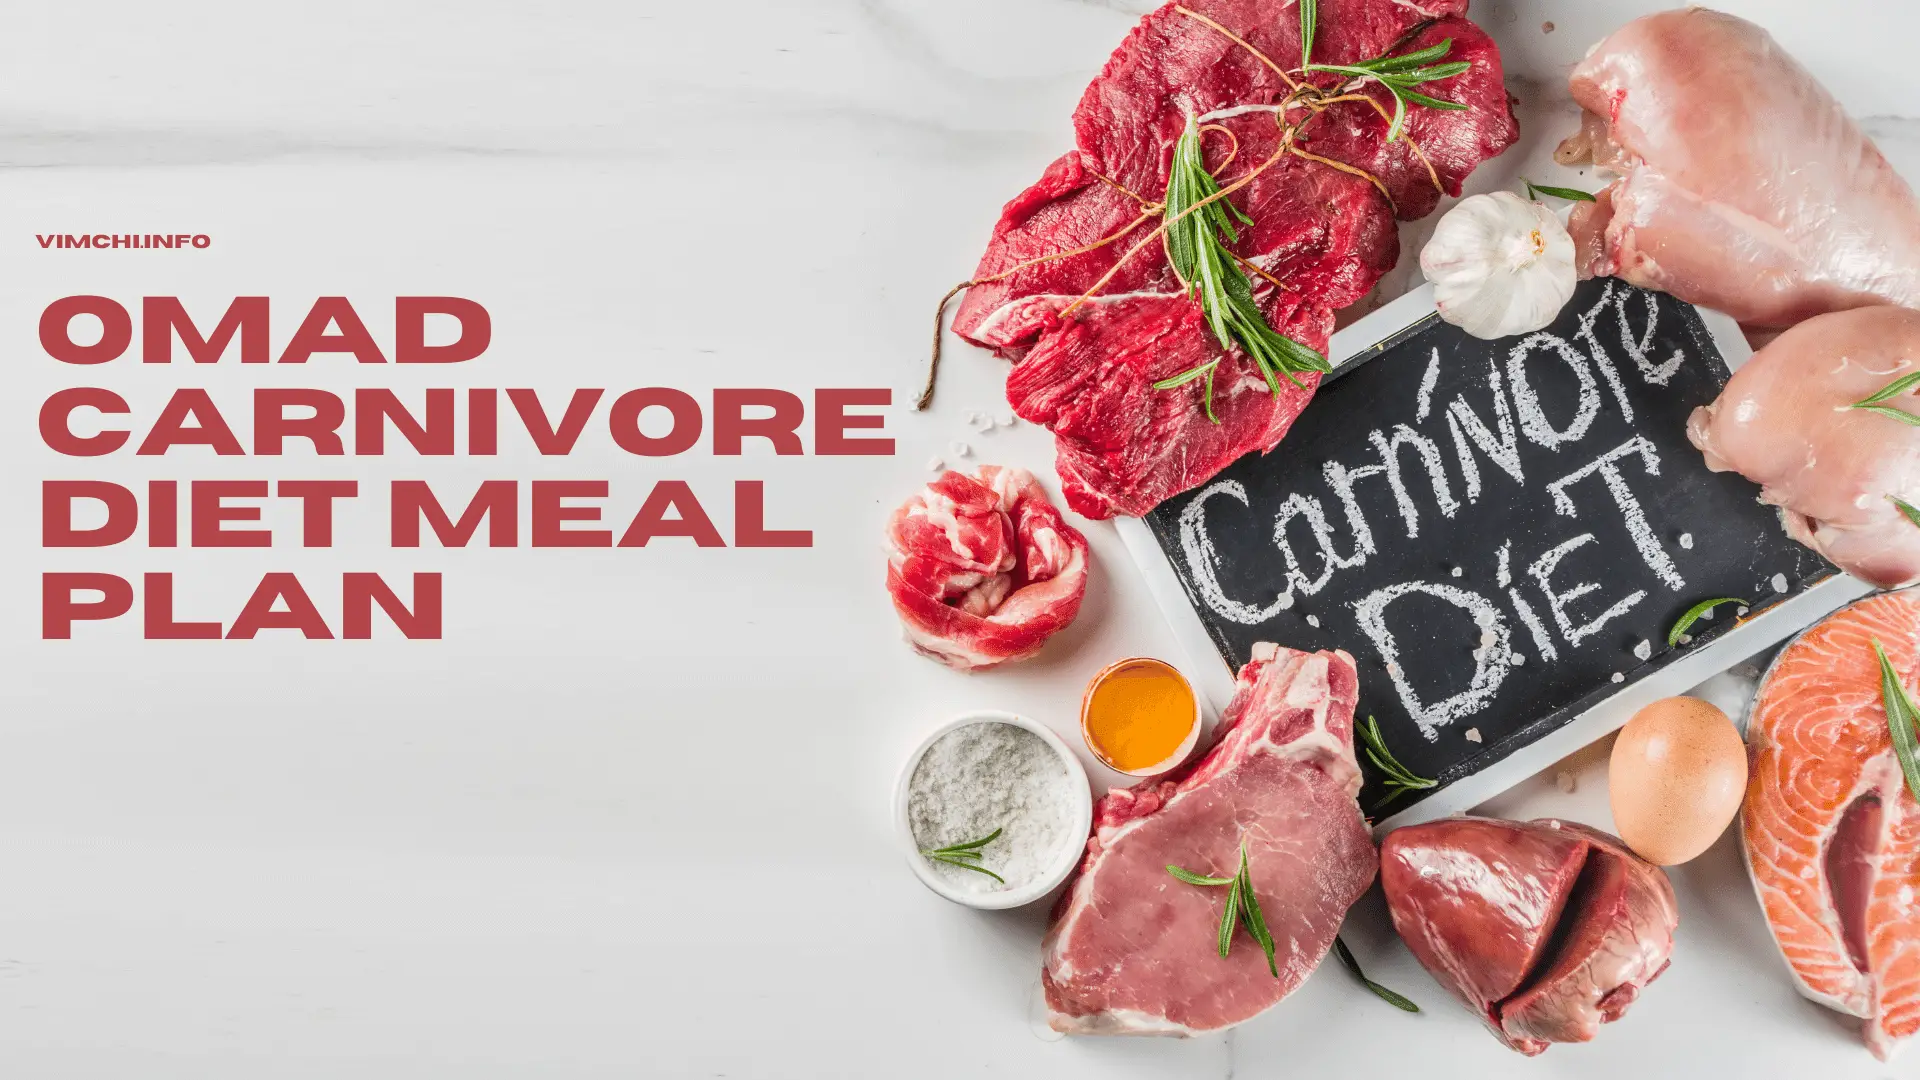 OMAD Carnivore Diet Meal Plan - block